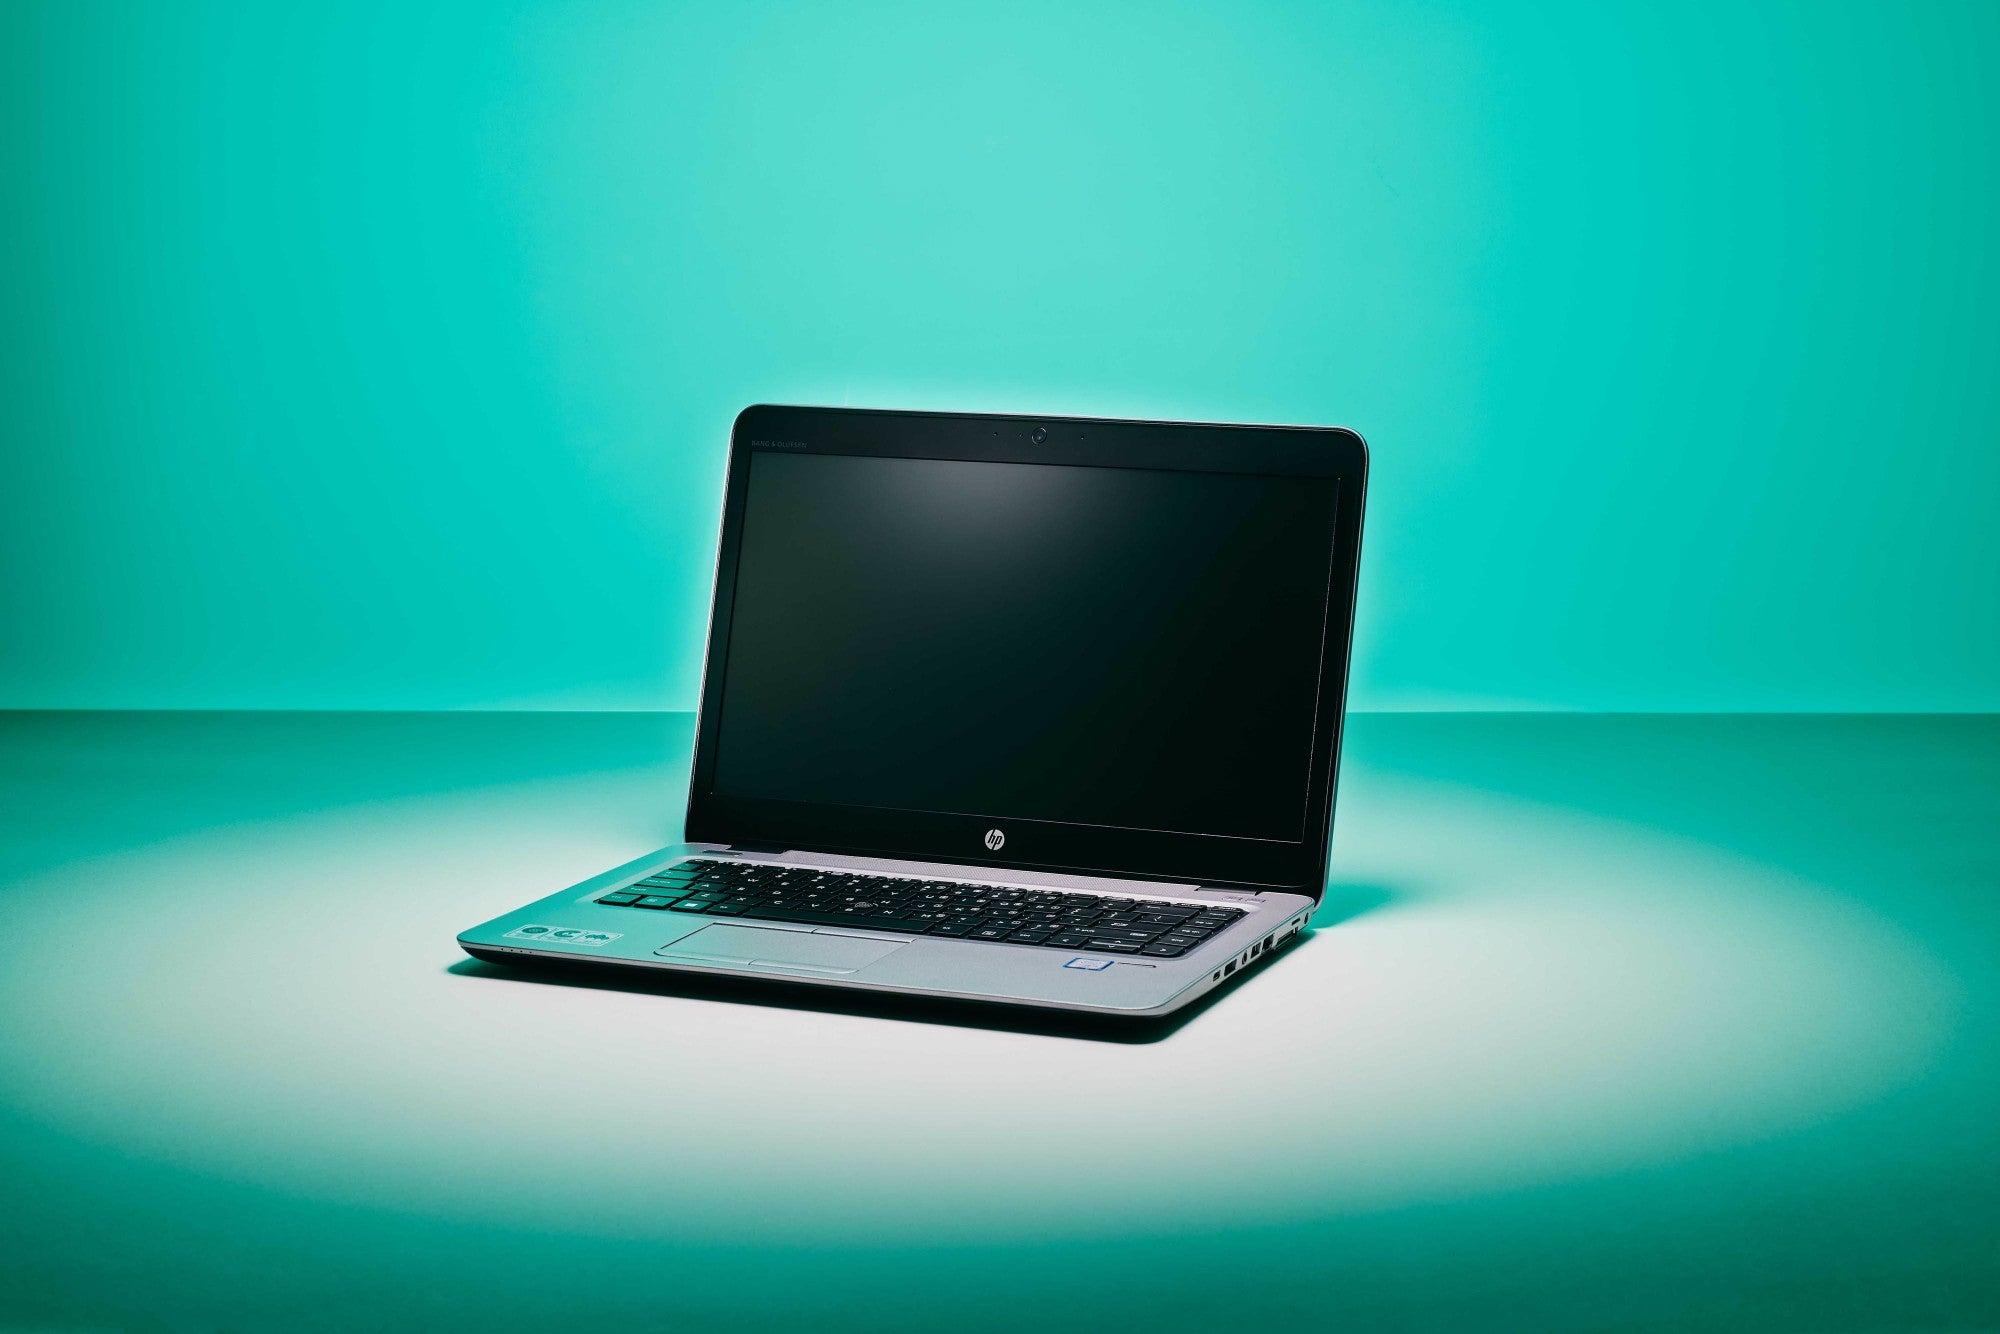 Circular Computing HP - EliteBook 840 G3 Laptop - 14" FHD (1920x1080) - Intel Core i5 6th Gen 6200U - 8GB RAM - 256GB SSD - Windows 10 Professional - Full UK (UK Layout) - Fully Tested Original Battery - IEEE 802.11ac Wireless LAN - 1 Year Advance Replace